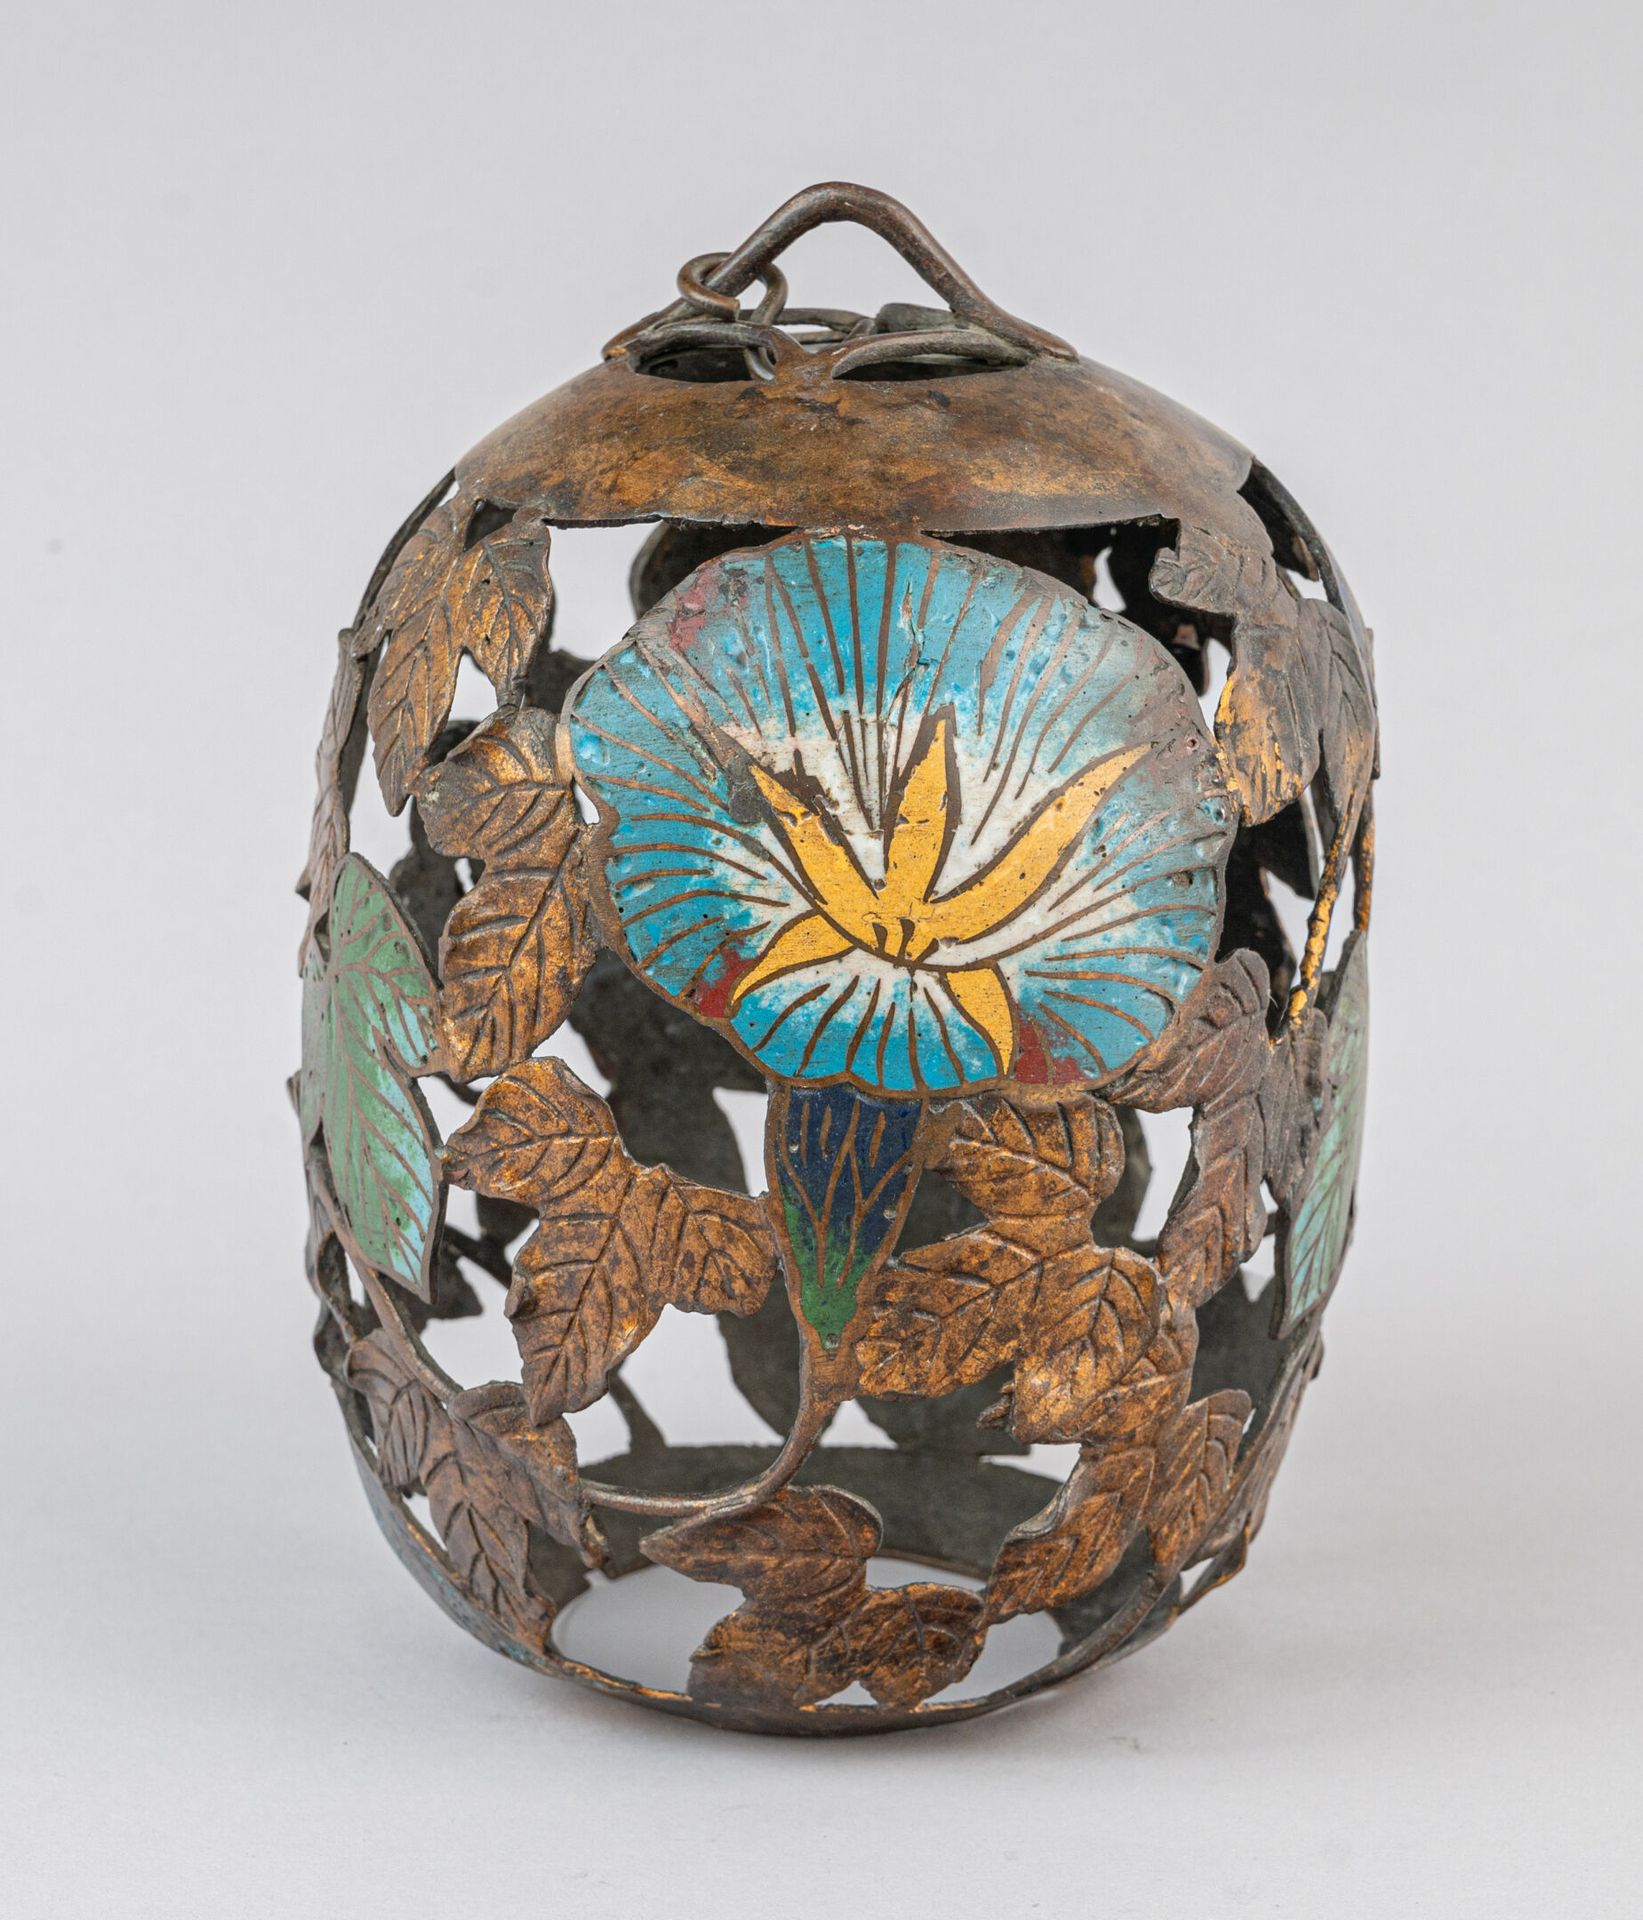 Null 青铜灯笼，日本，20 世纪早期
镂空卵形灯笼，饰有叶子和花朵（蓼属植物），部分为彩色珐琅，带挂钩。 
H.27.5 厘米